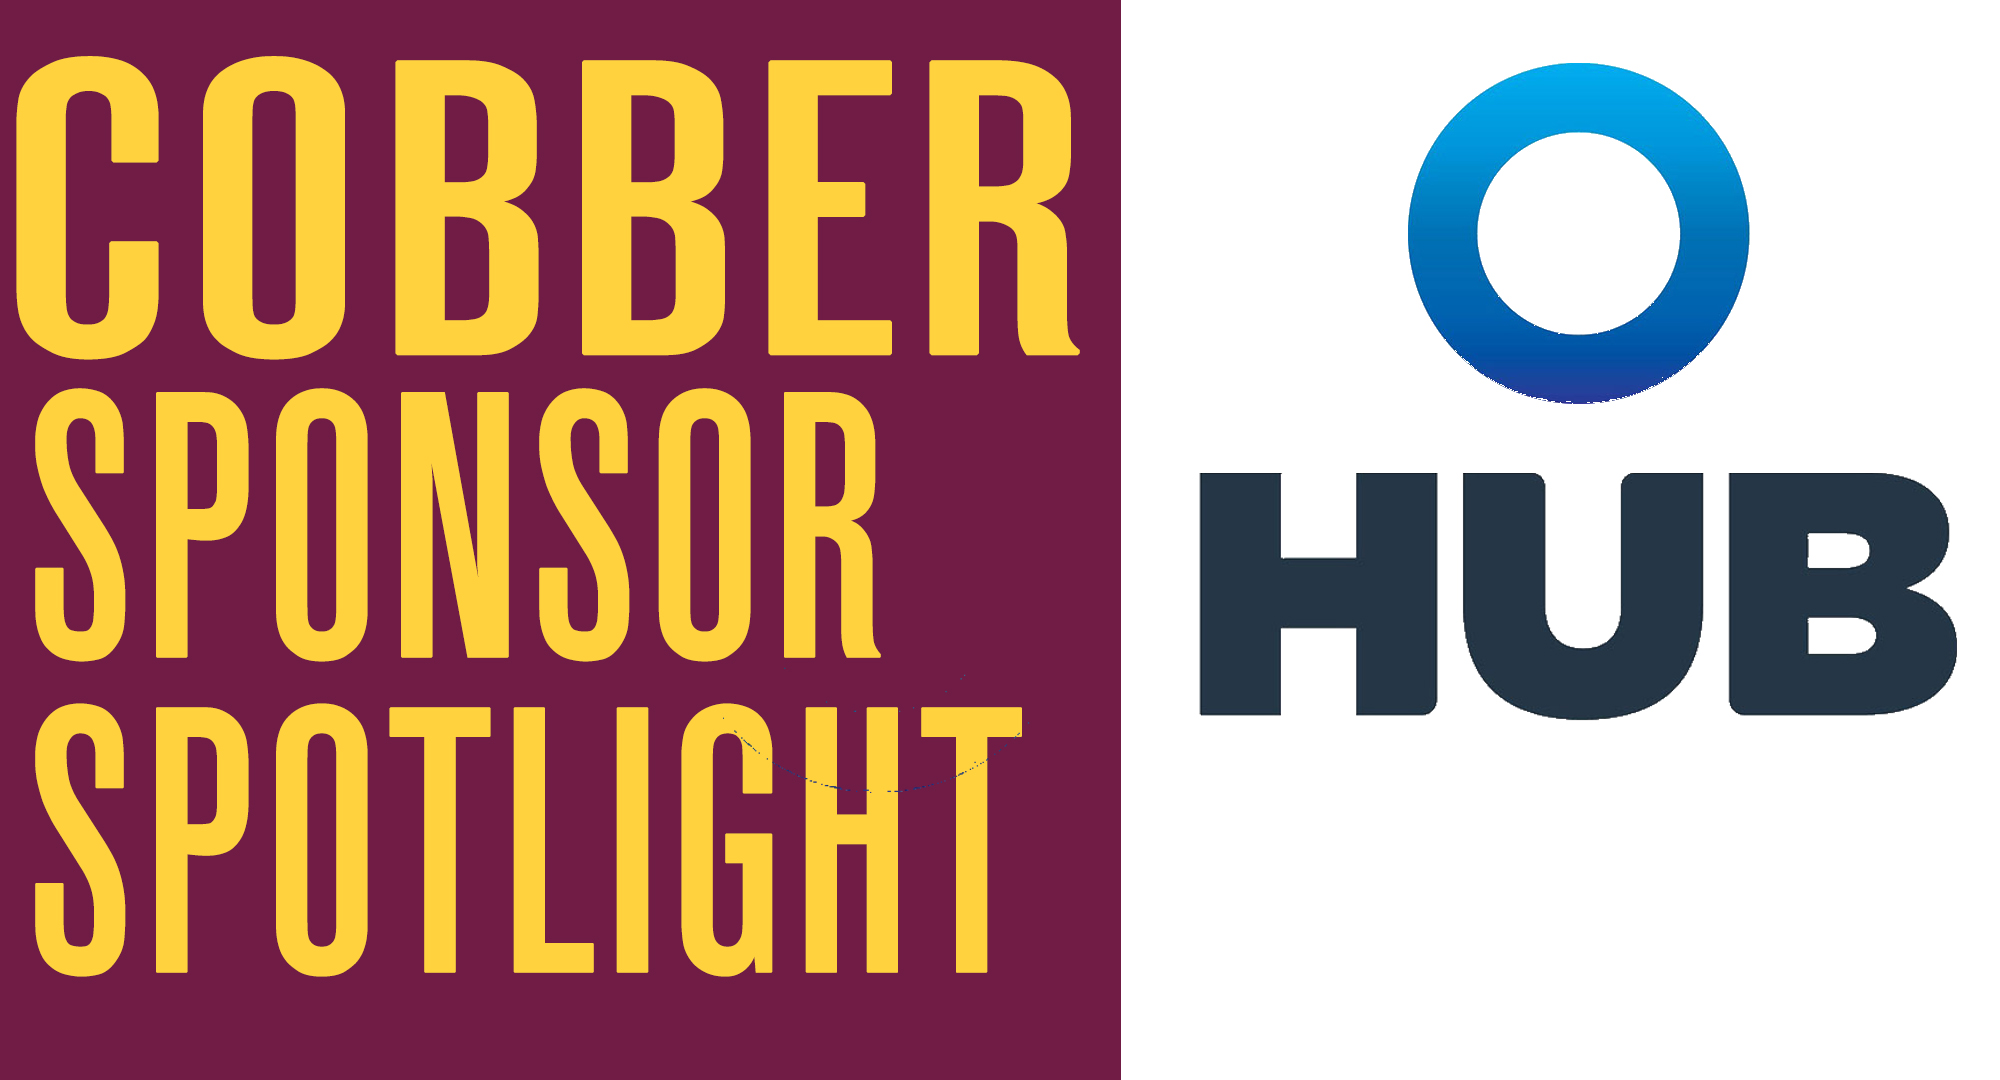 Cobber Sponsor Spotlight - HUB International Insurance Fargo